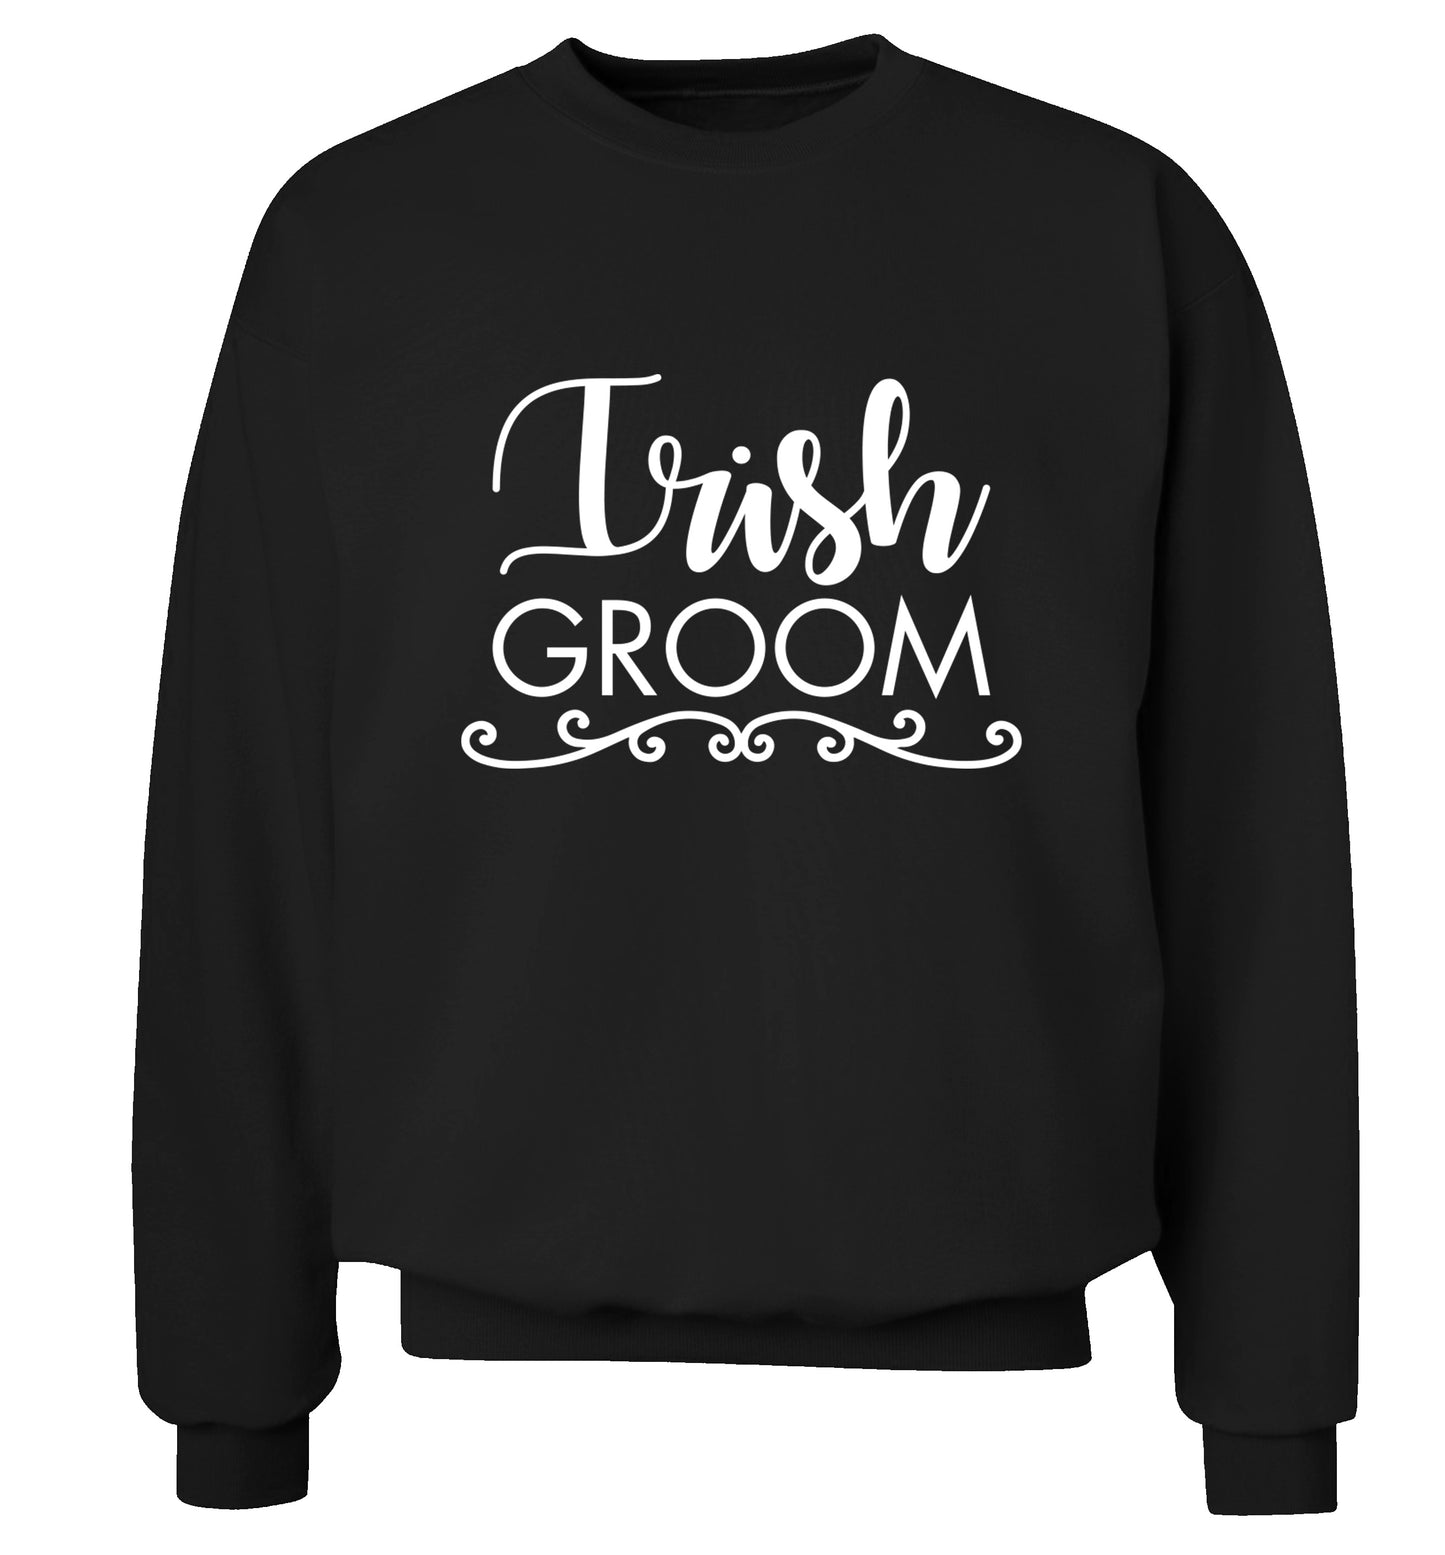 Irish groom Adult's unisex black Sweater 2XL